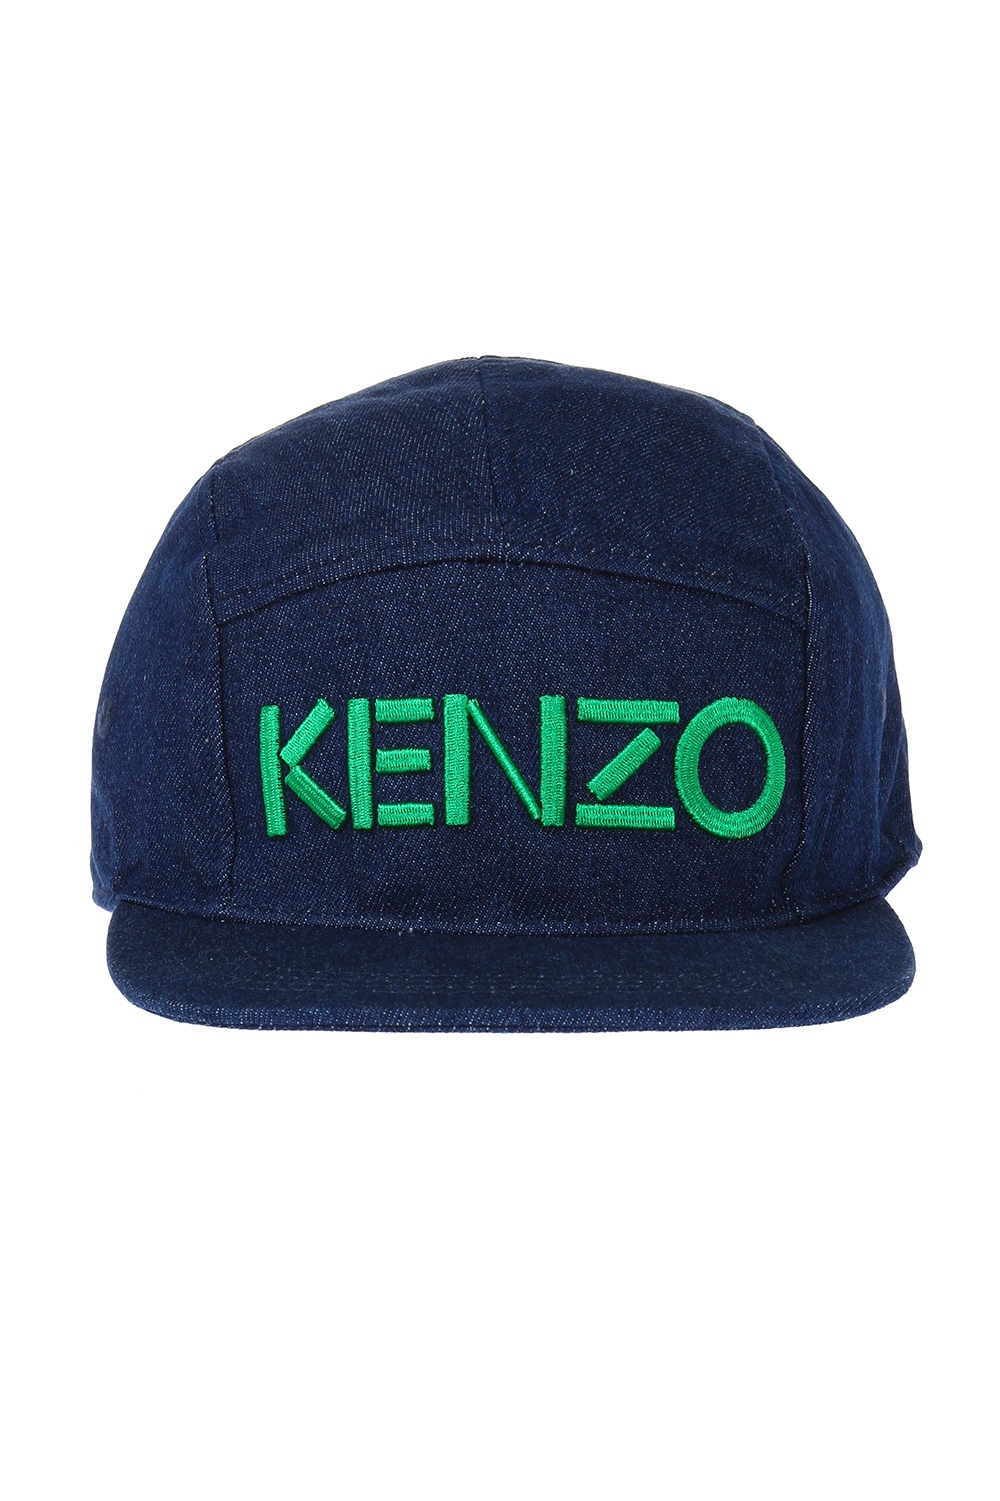 kids kenzo cap